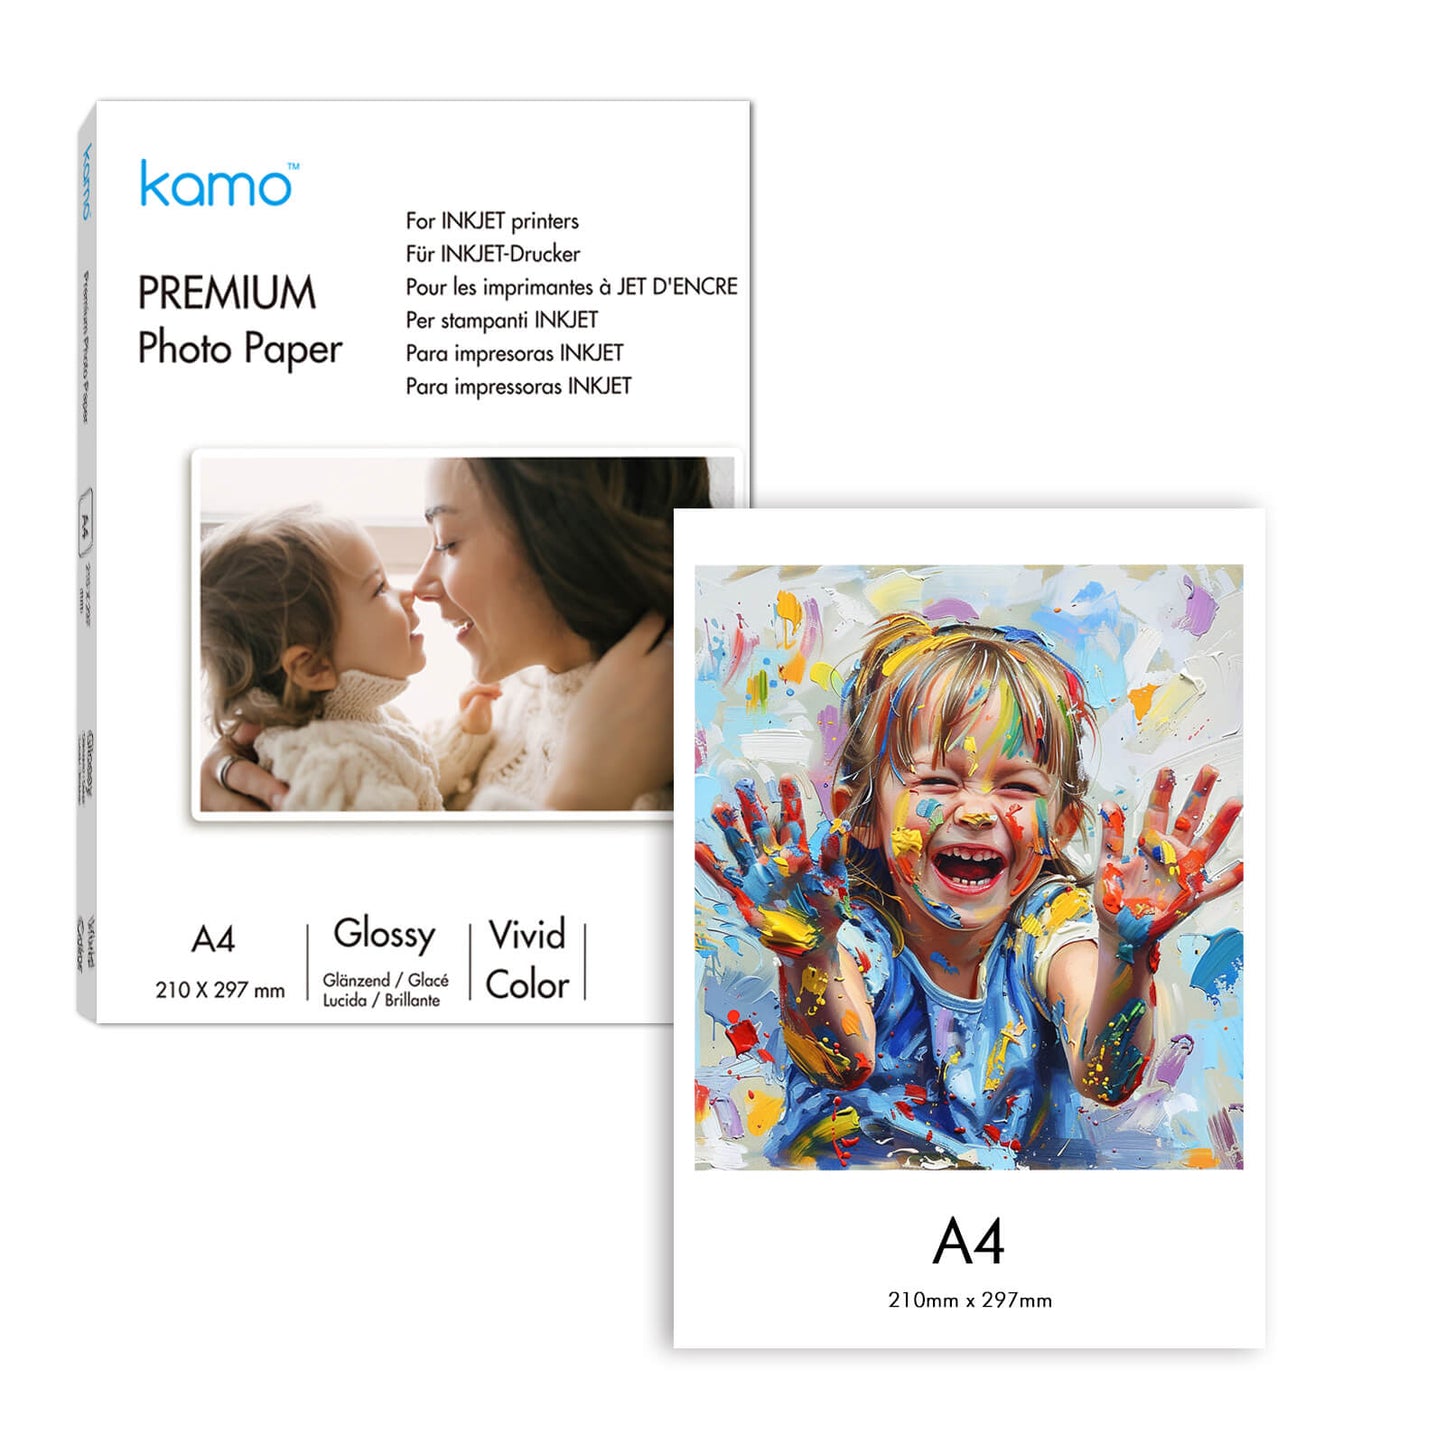 Kamo NFC Music Frame Premier Kits